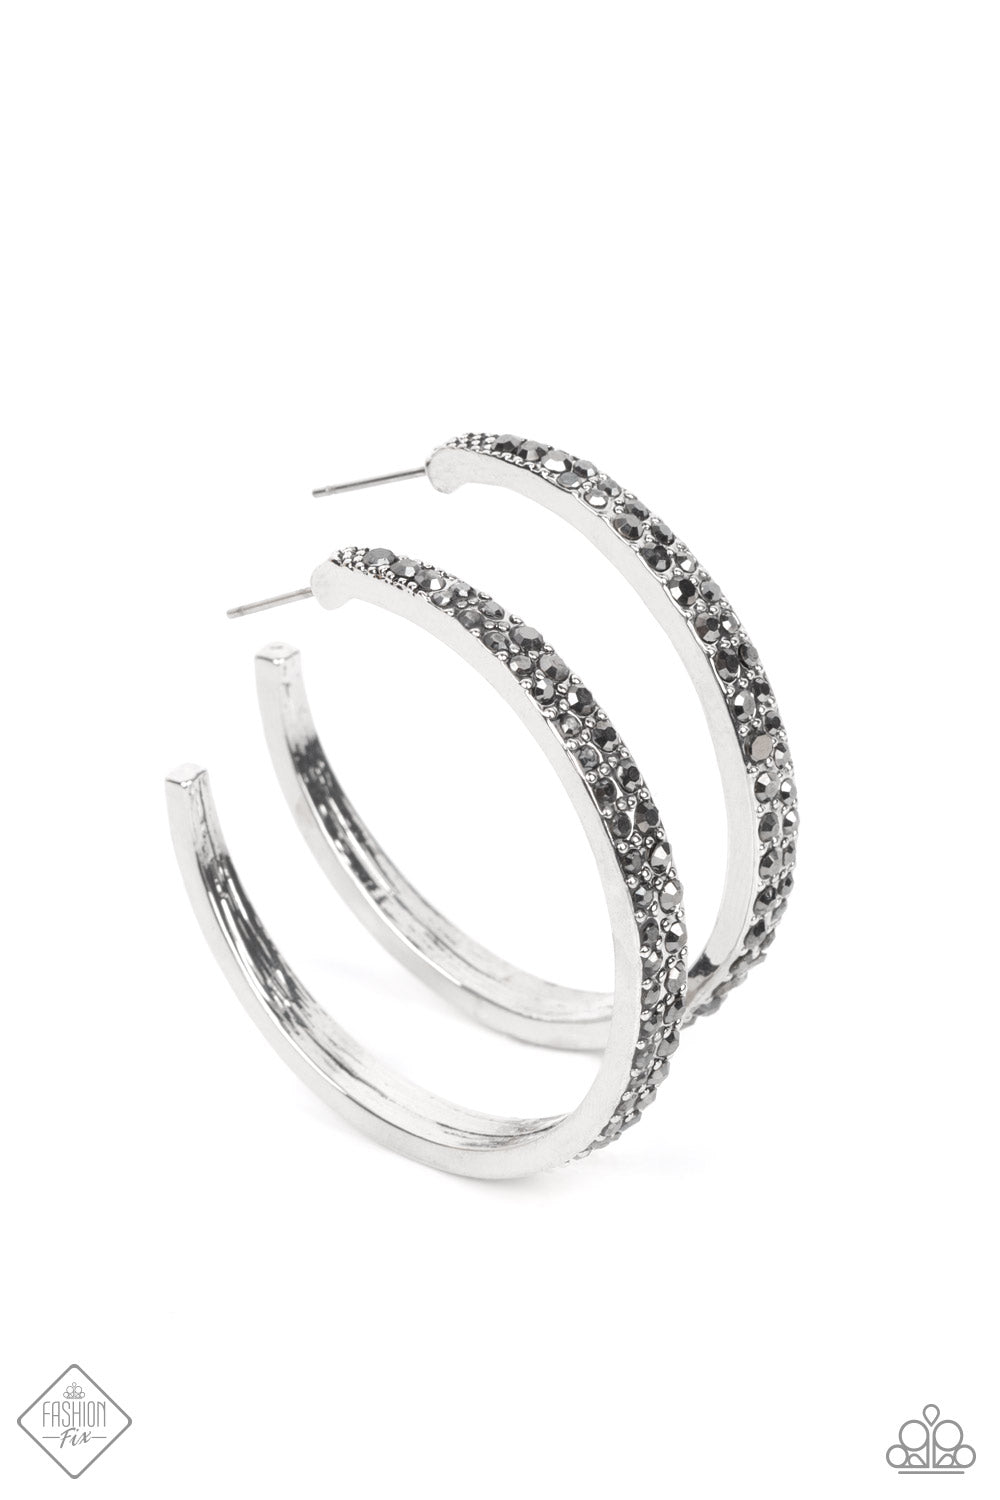 Paparazzi Tick, Tick, Boom! - Silver Fashion Fix Earrings - A Finishing Touch Jewelry